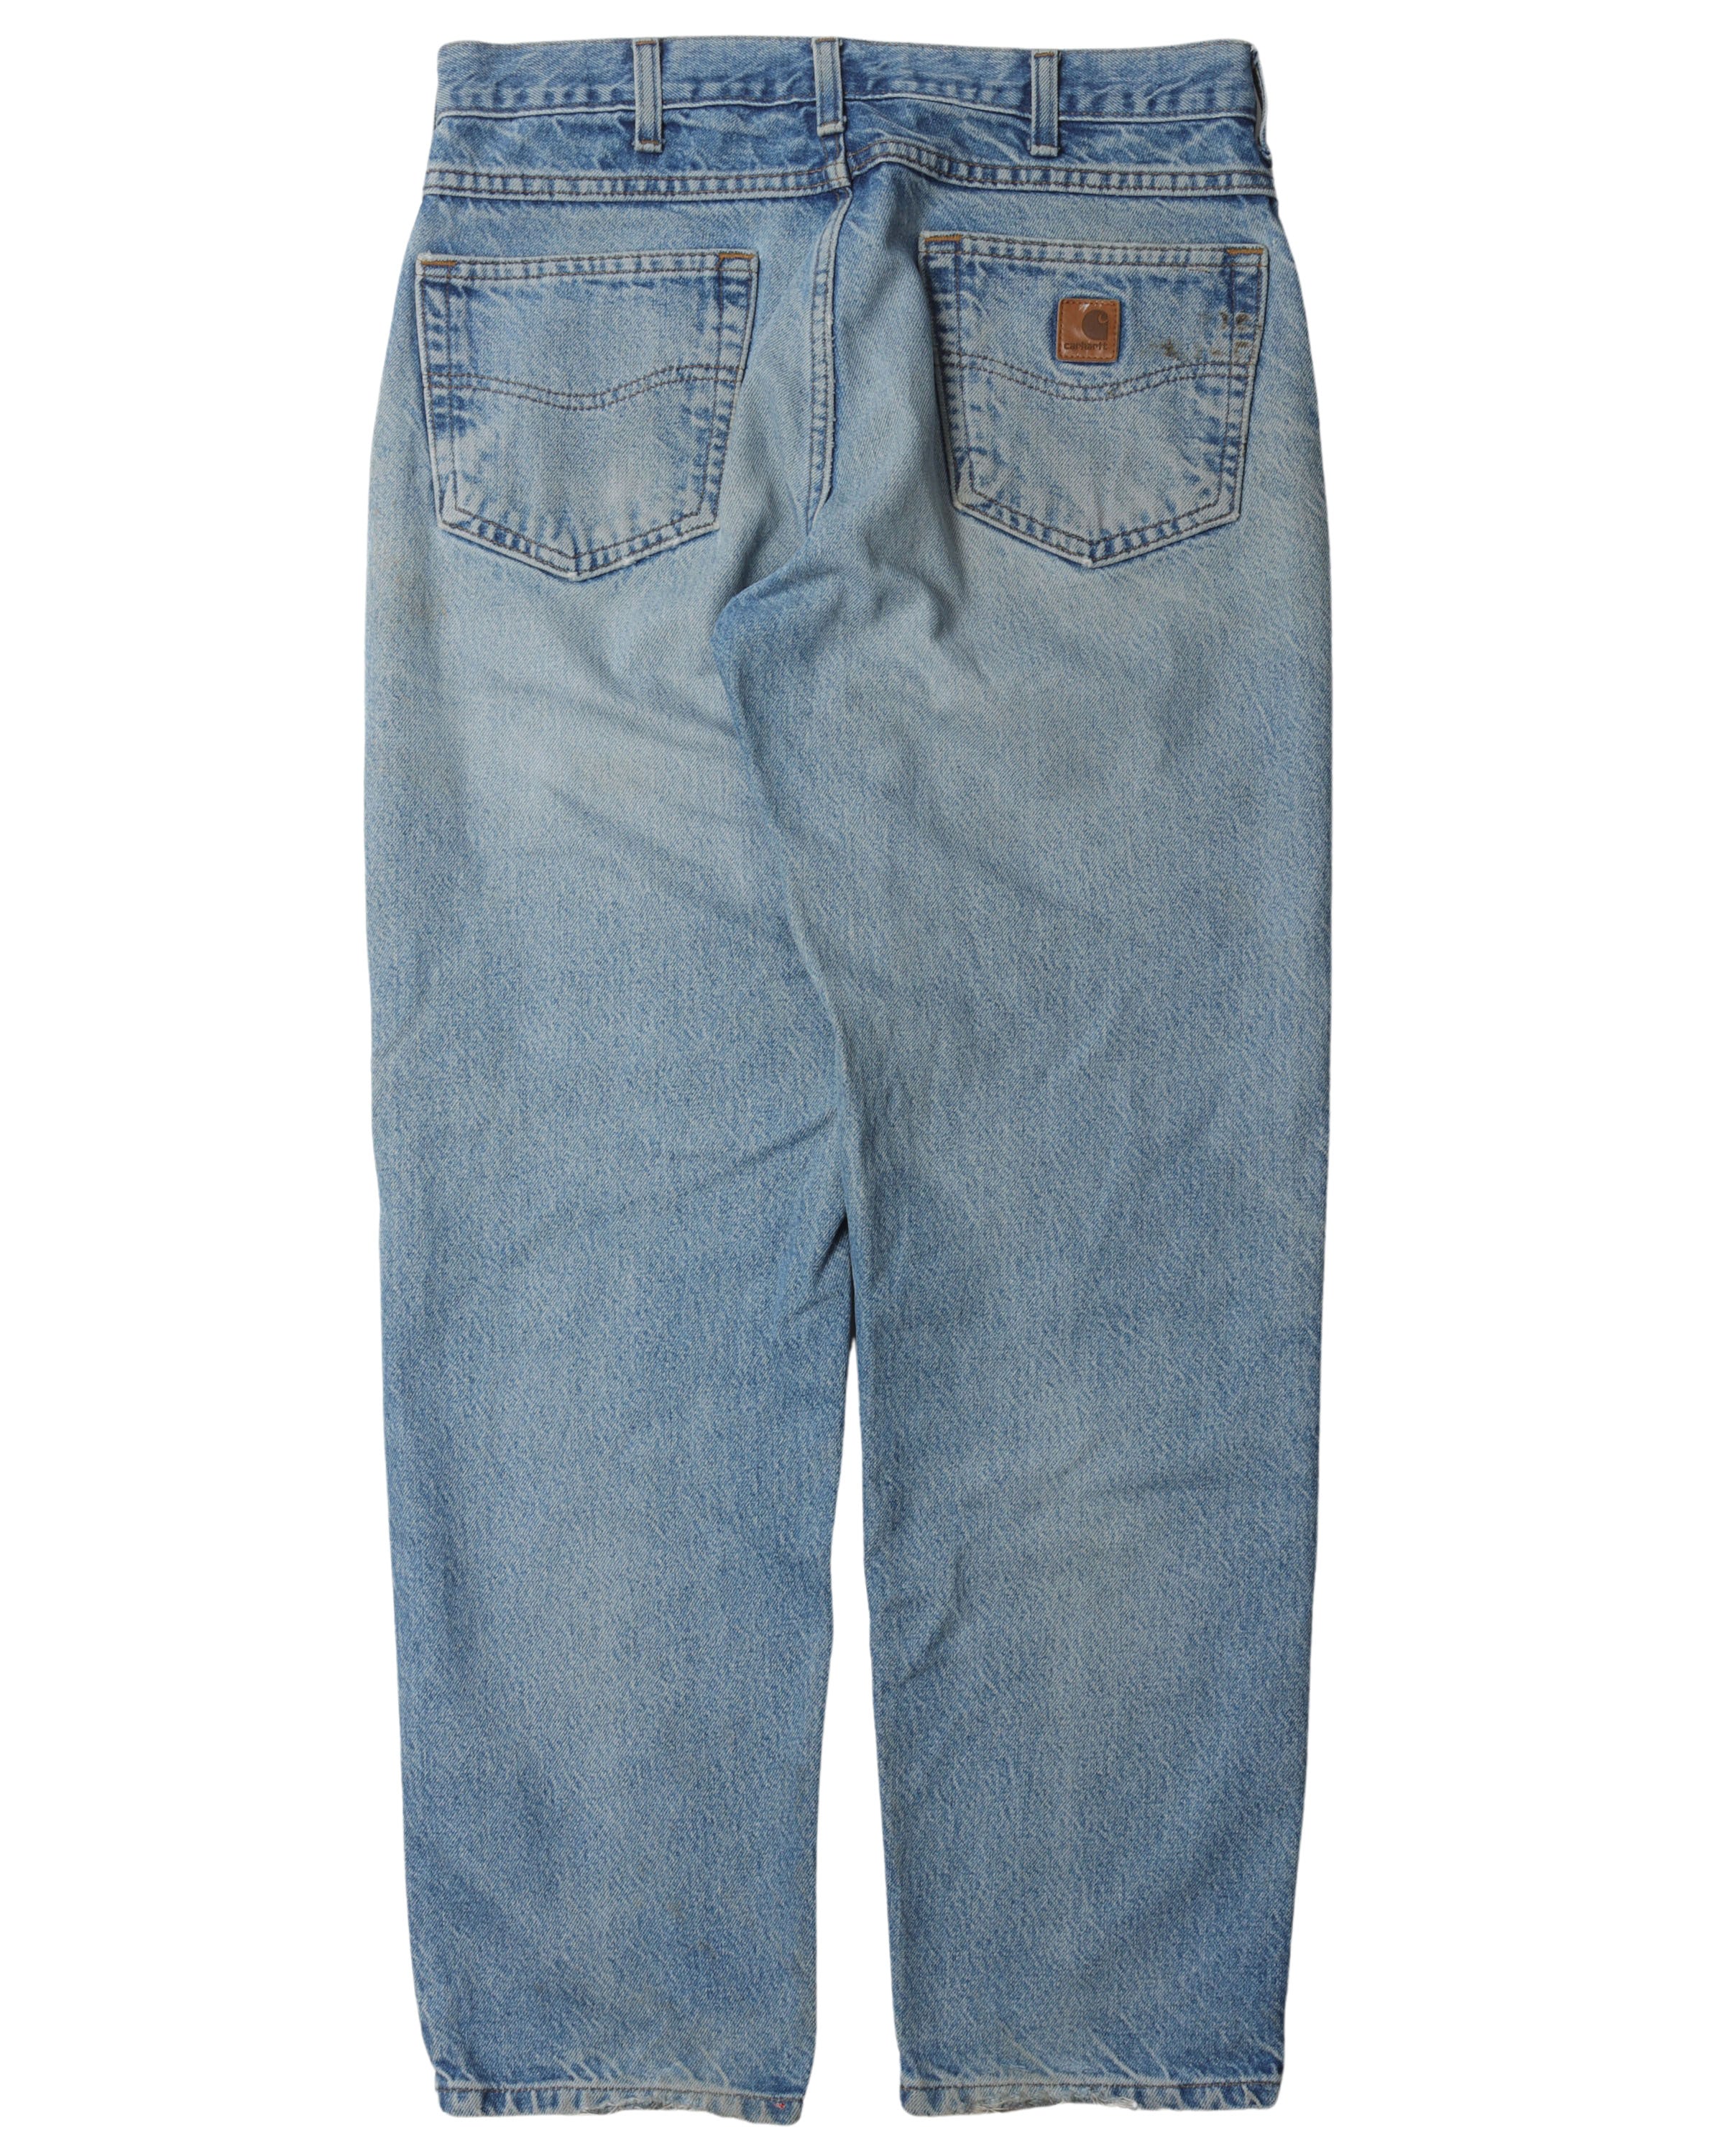 Distressed Carhartt Jeans